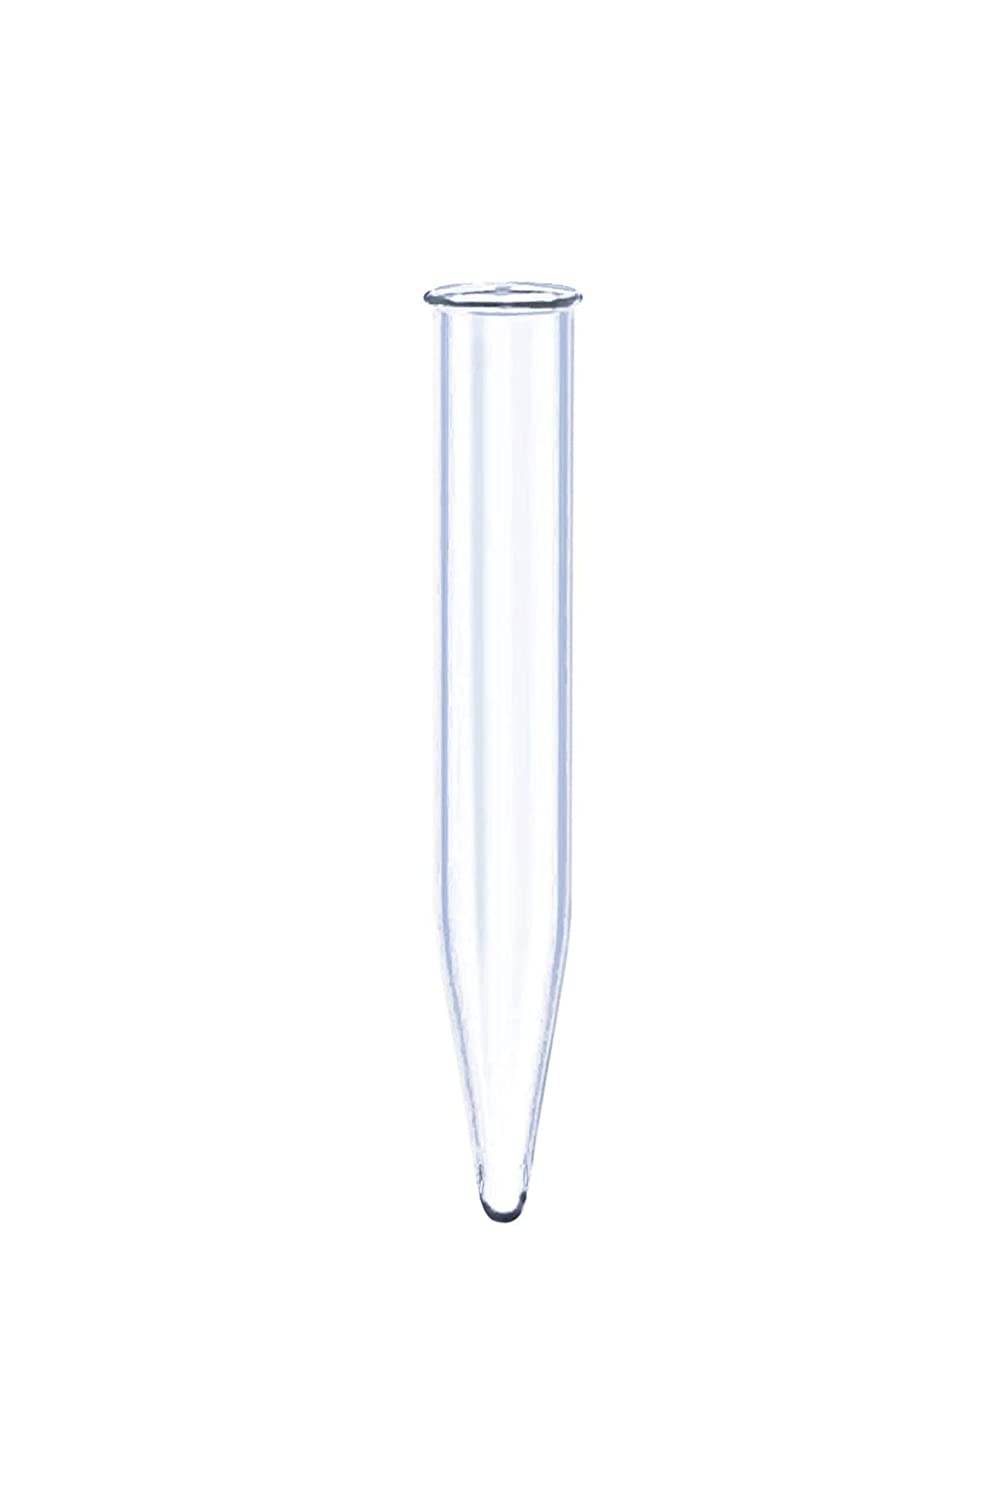 centrifuge-tube-borosilicate-glass-15ml